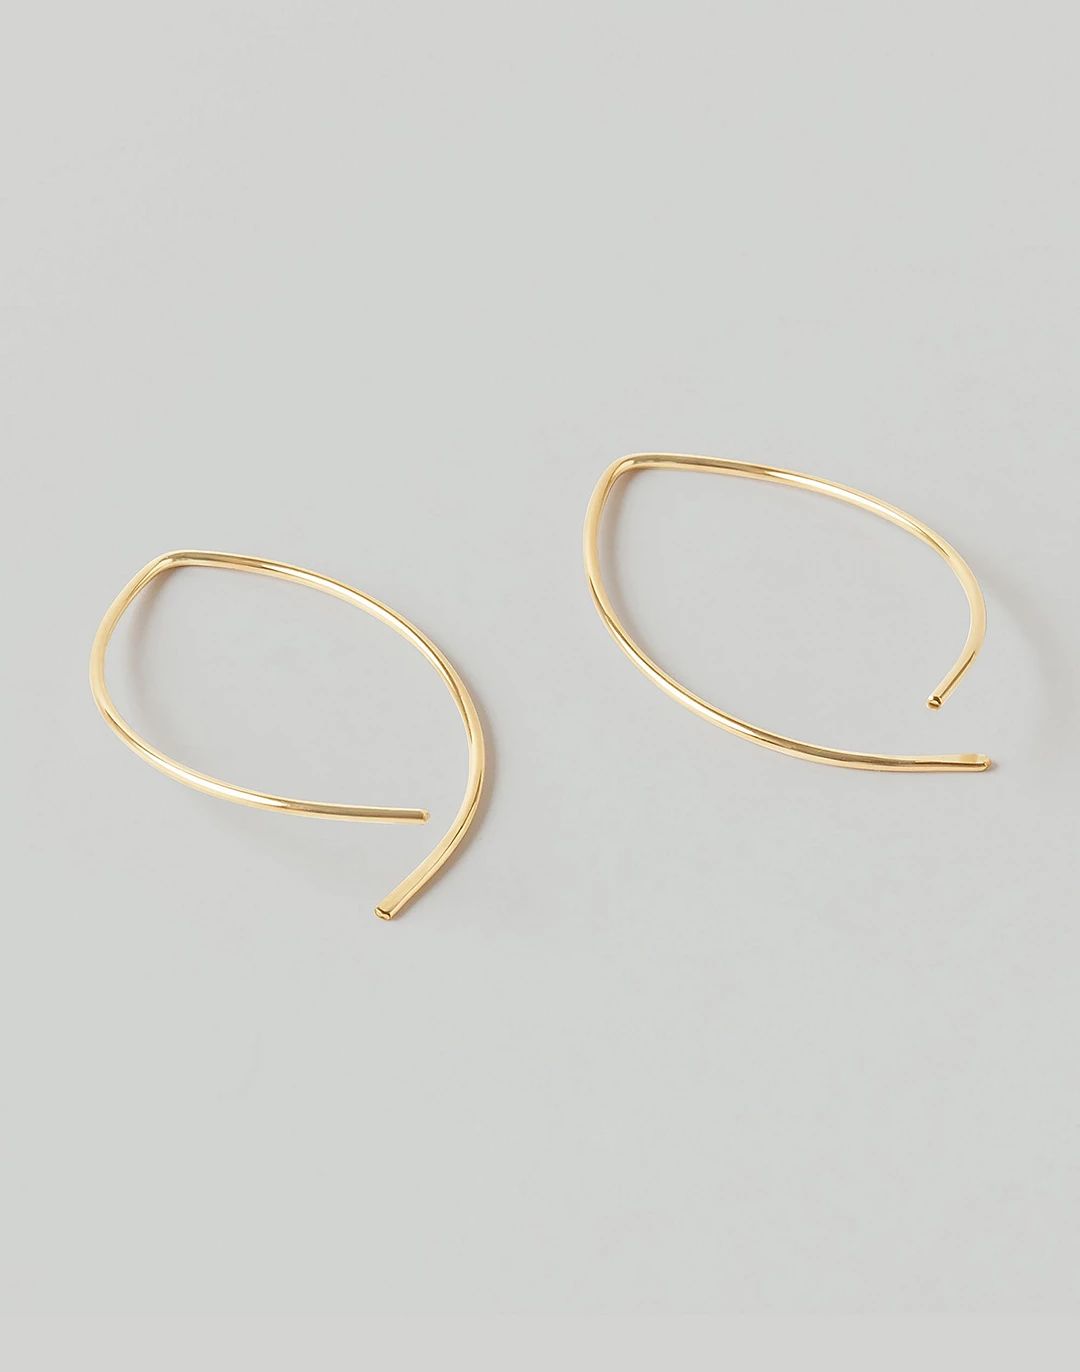 Sheena Marshall Jewelry Poppy Earrings | Madewell